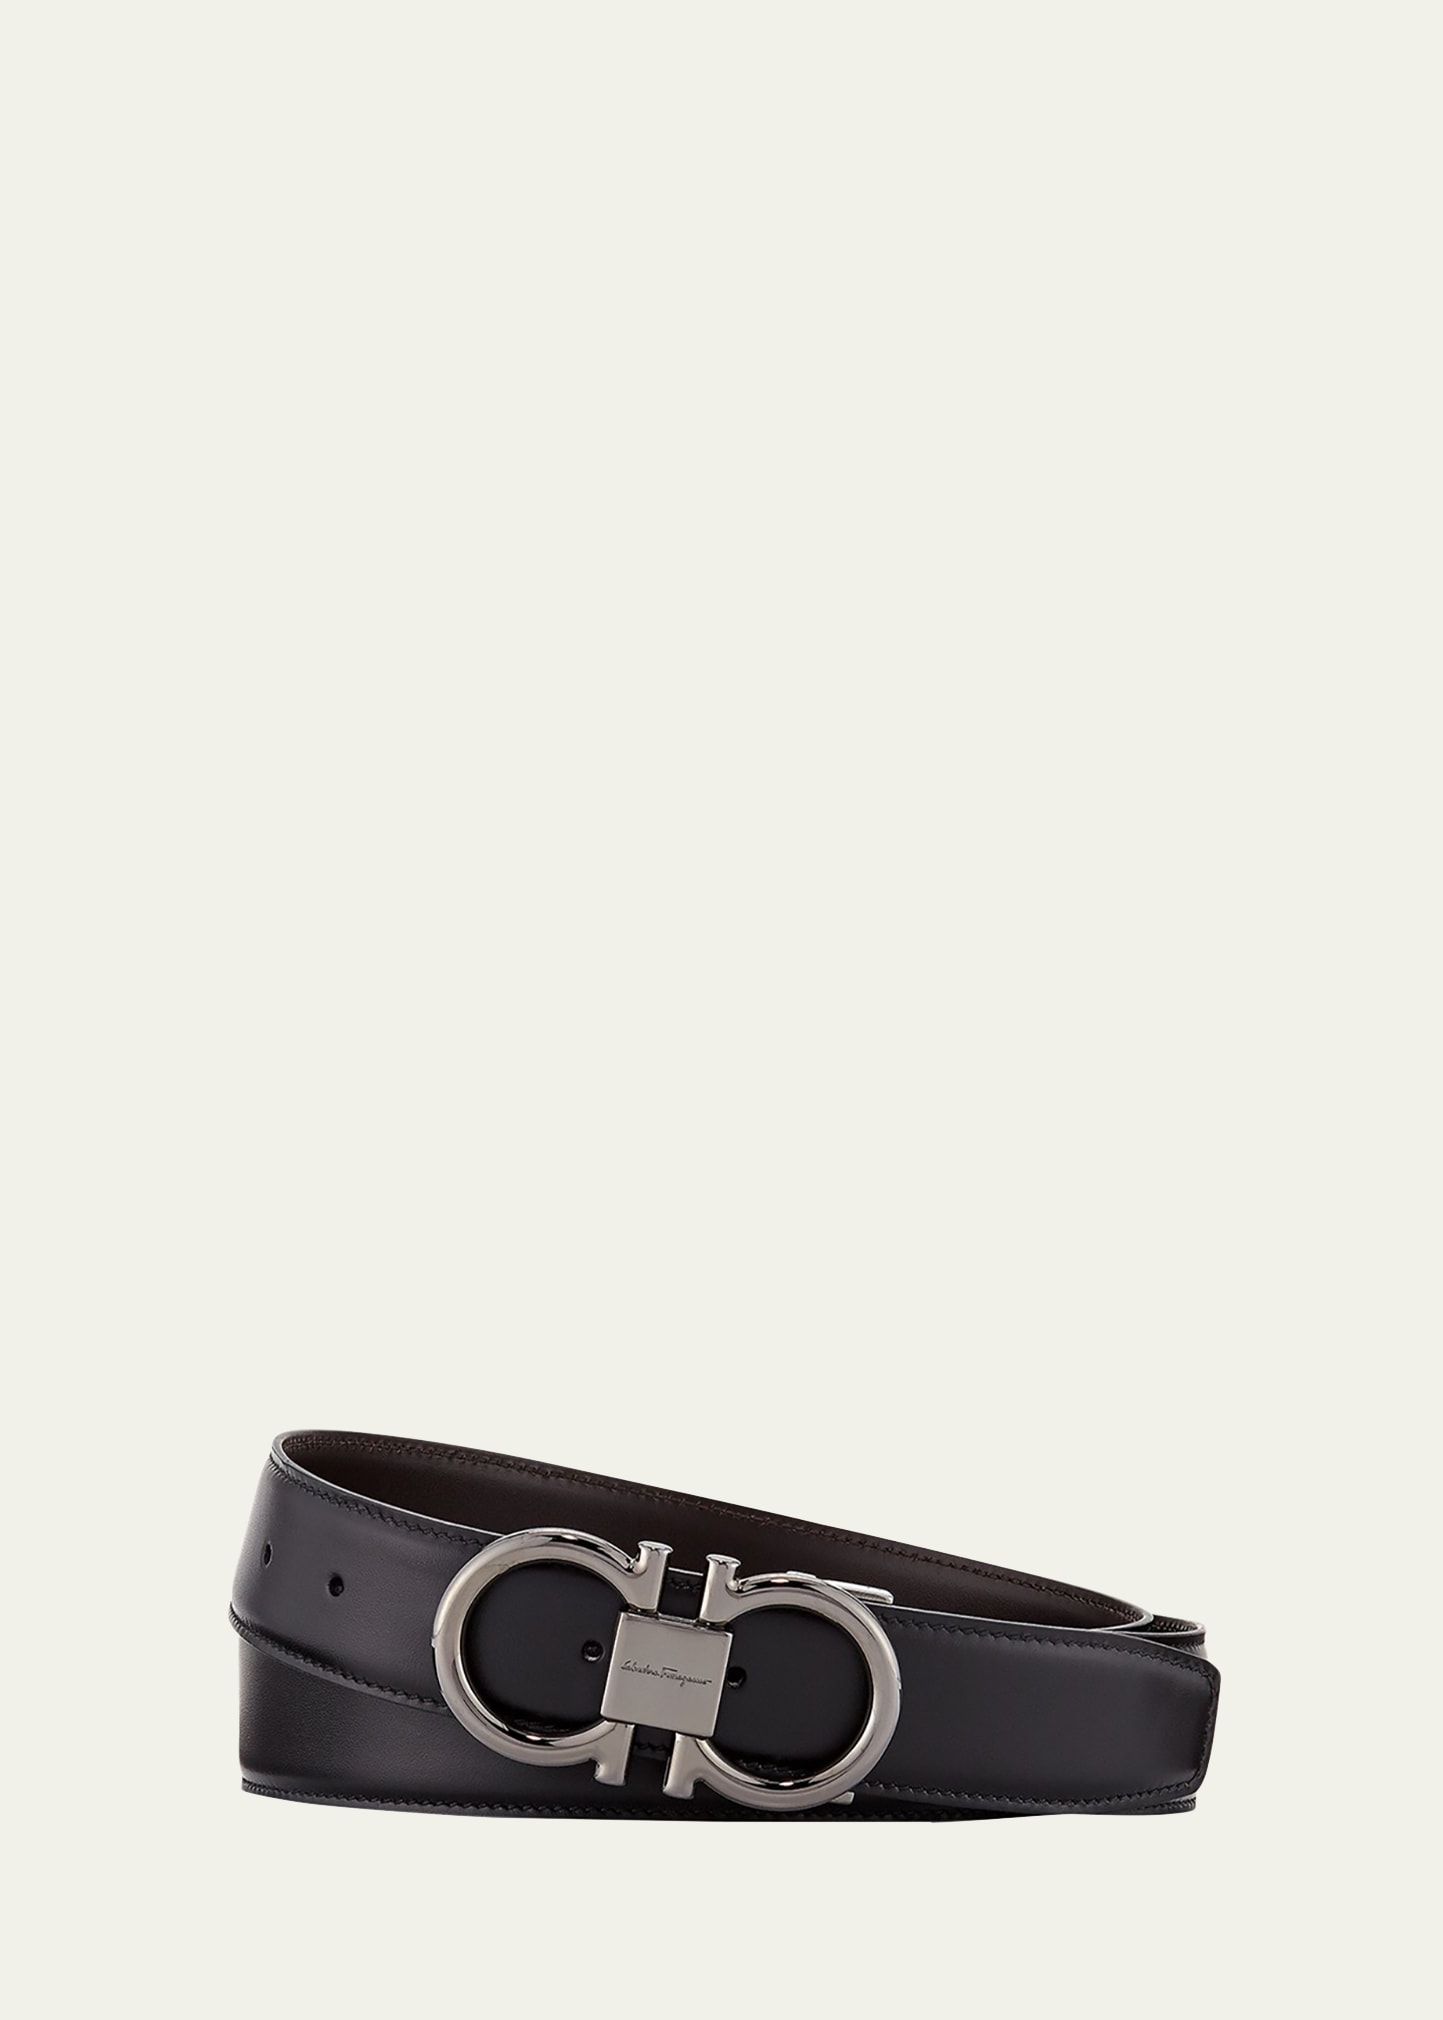 Leather belt Salvatore Ferragamo Black size 100 cm in Leather